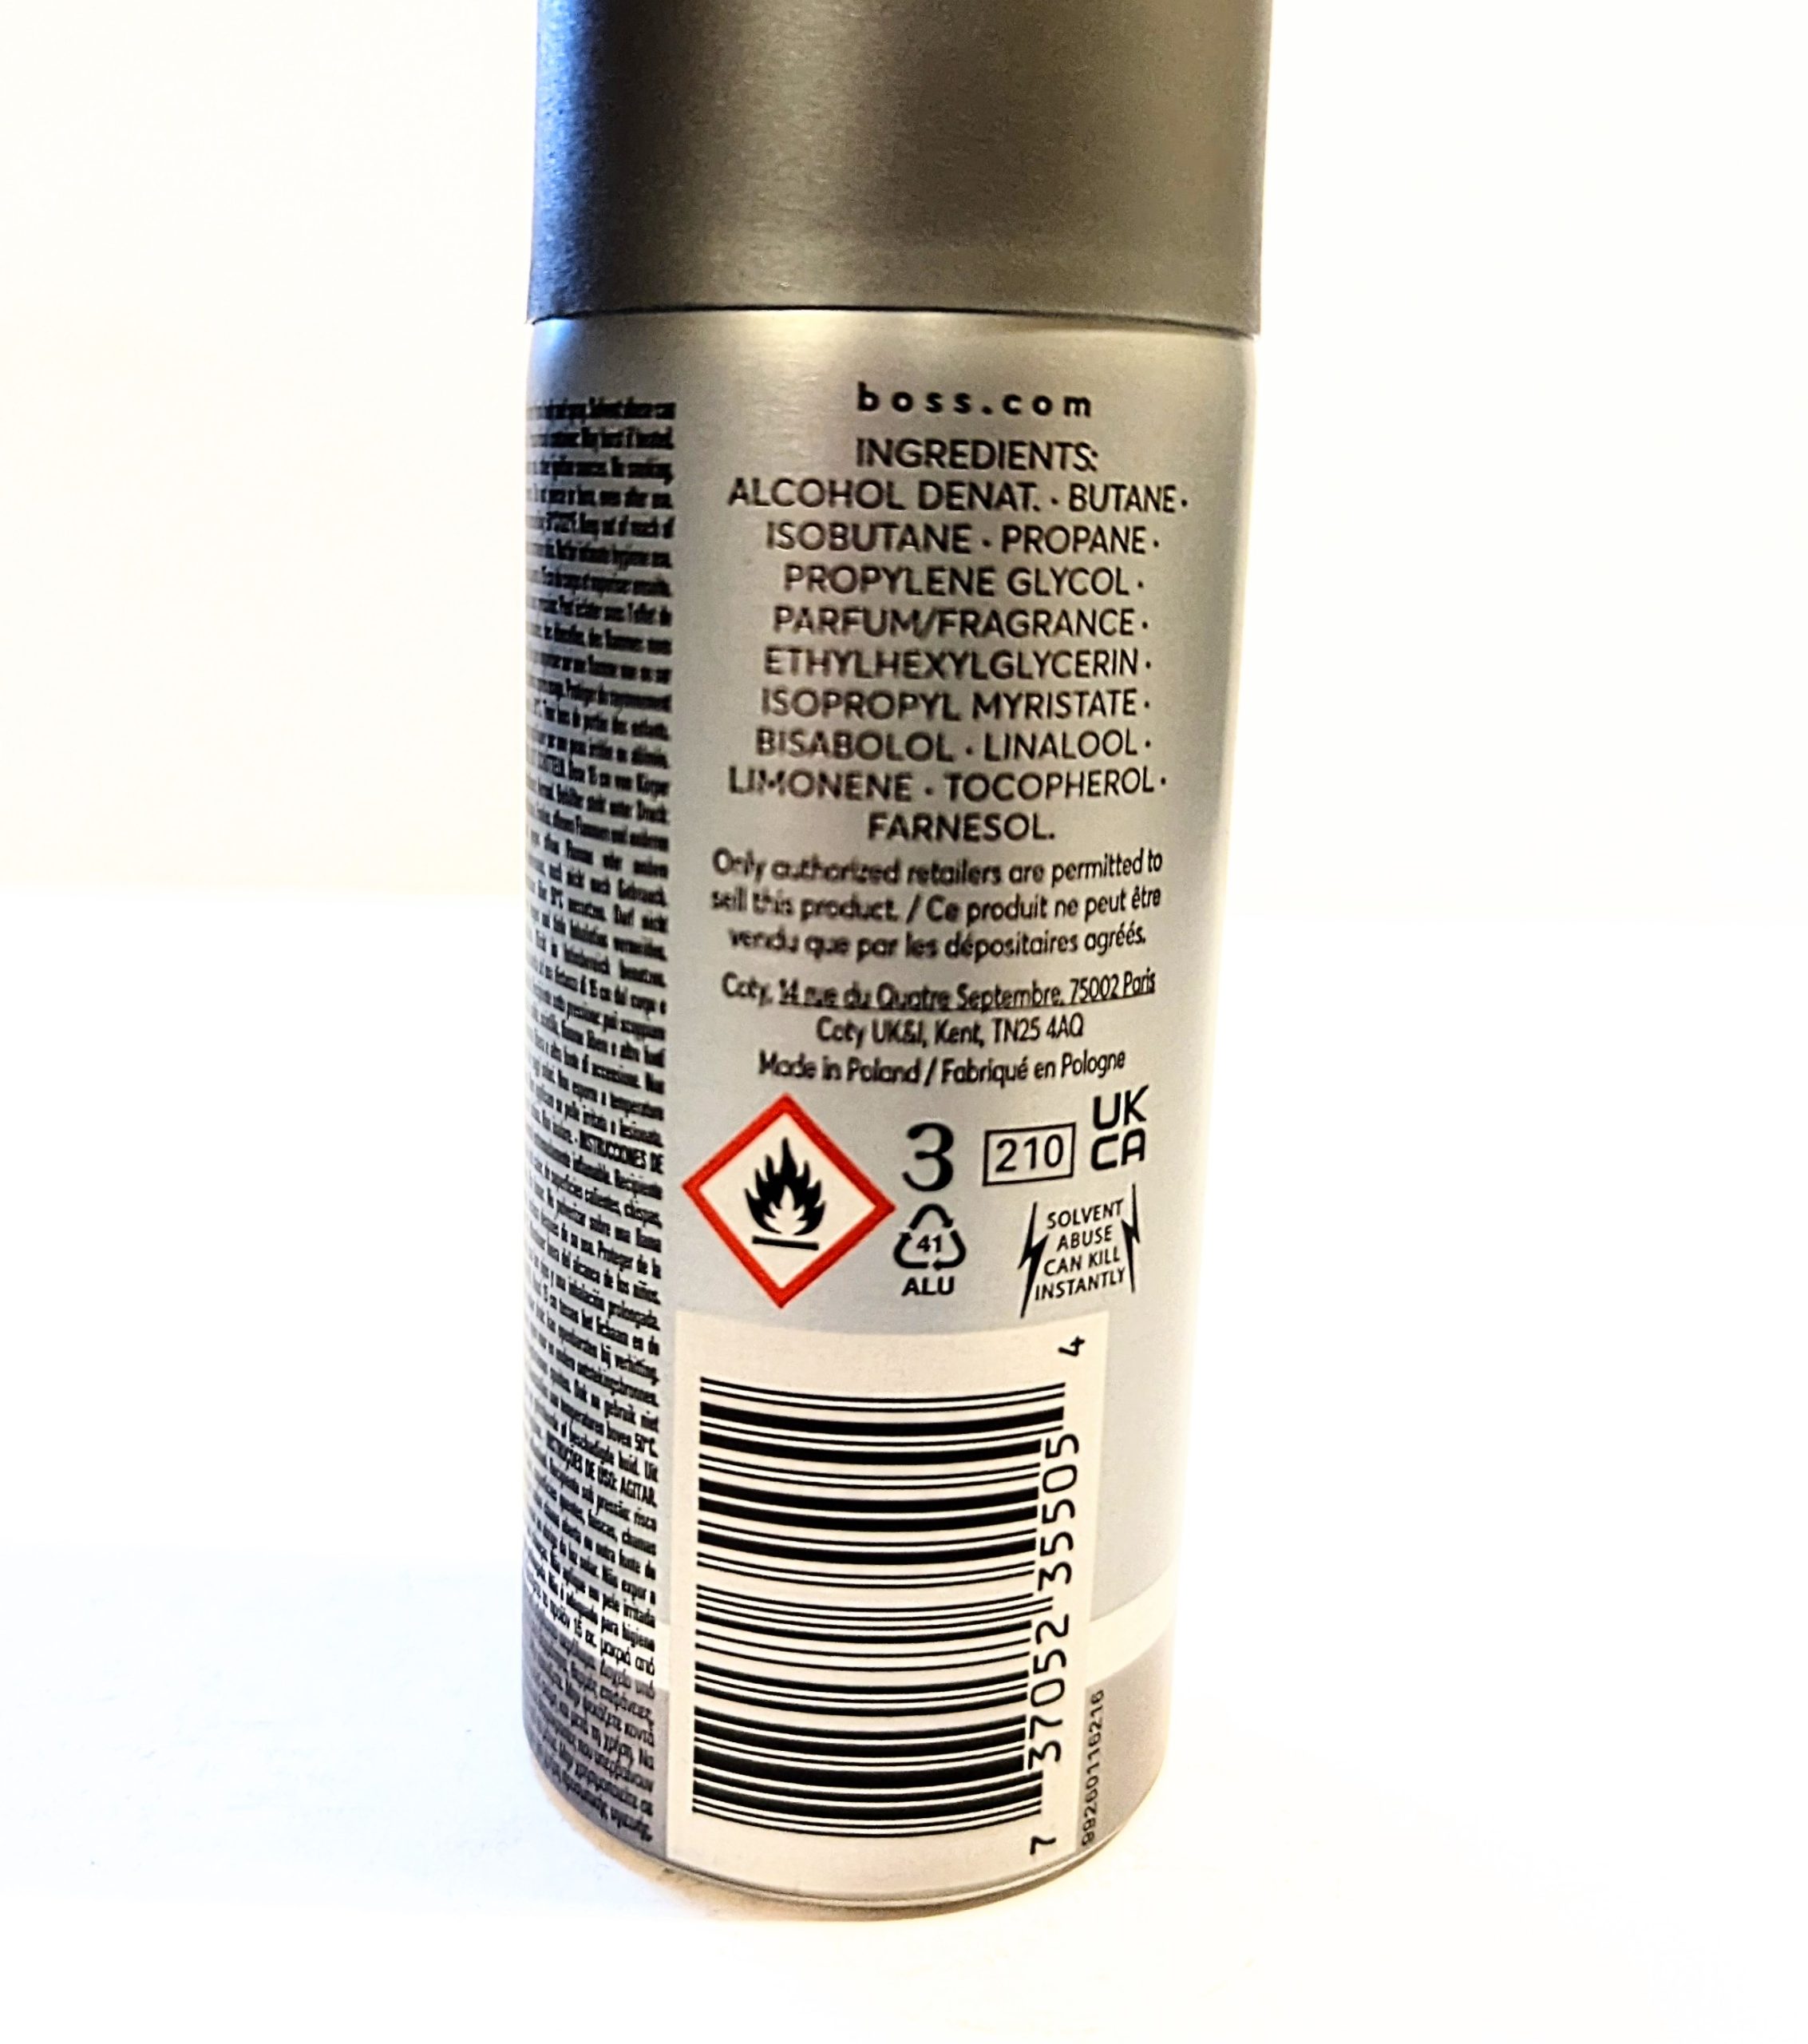 A can of Hugo Boss Bottled Deodorant Body Spray for Men on a white background.